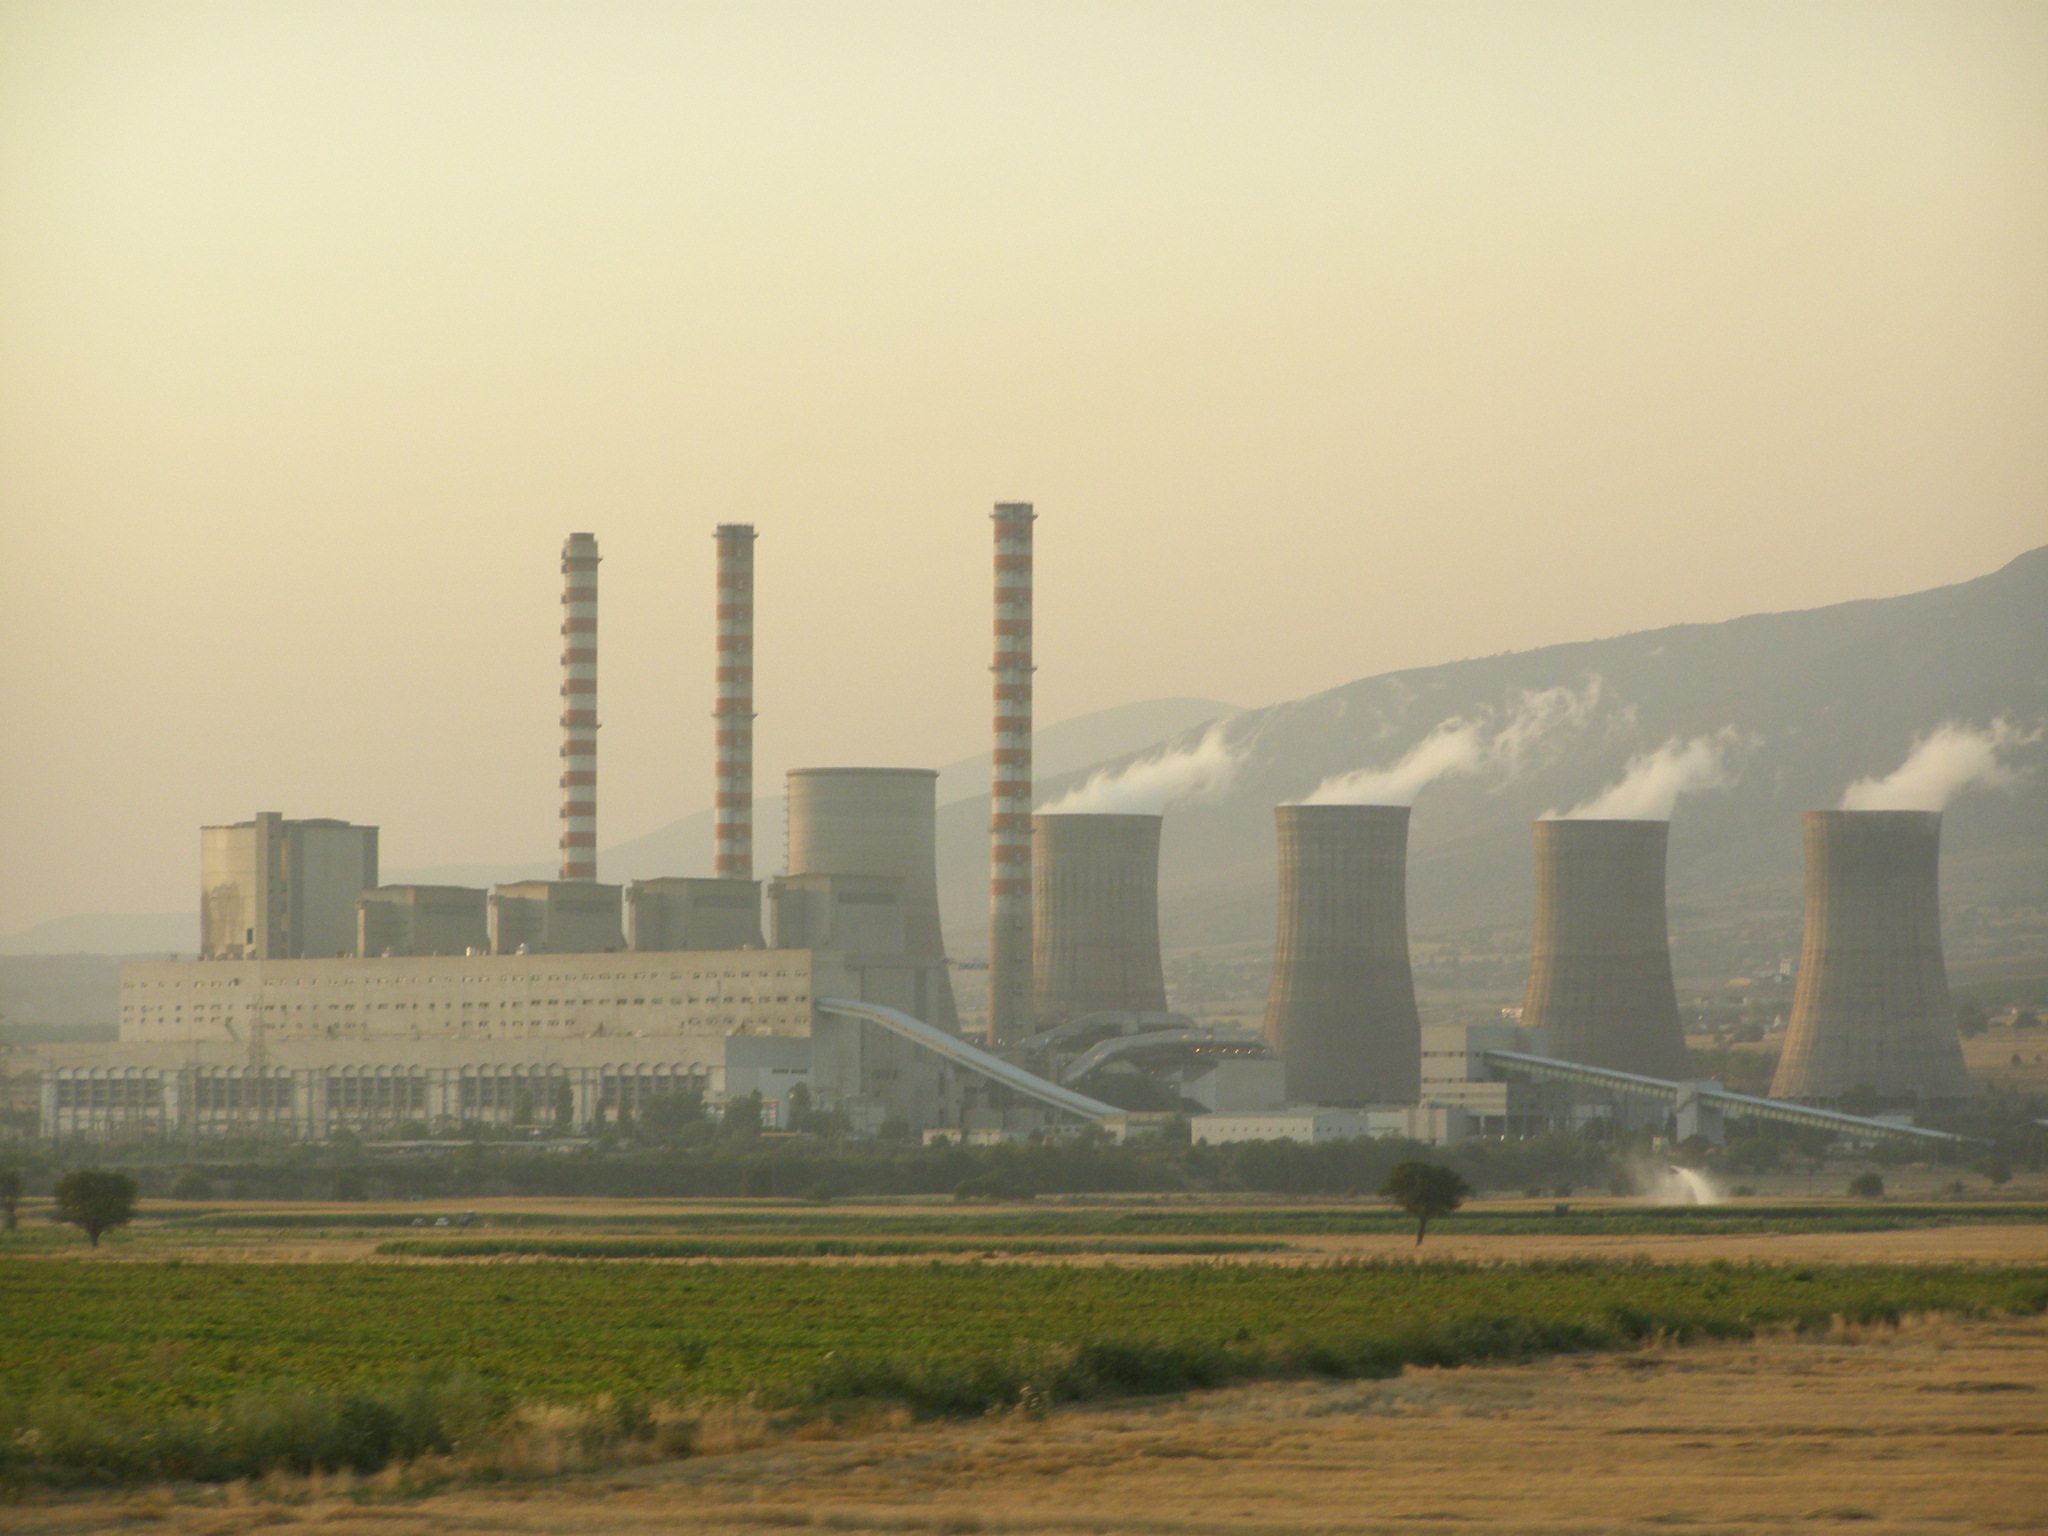 Thermal power plant, Kozani, Northern Greece